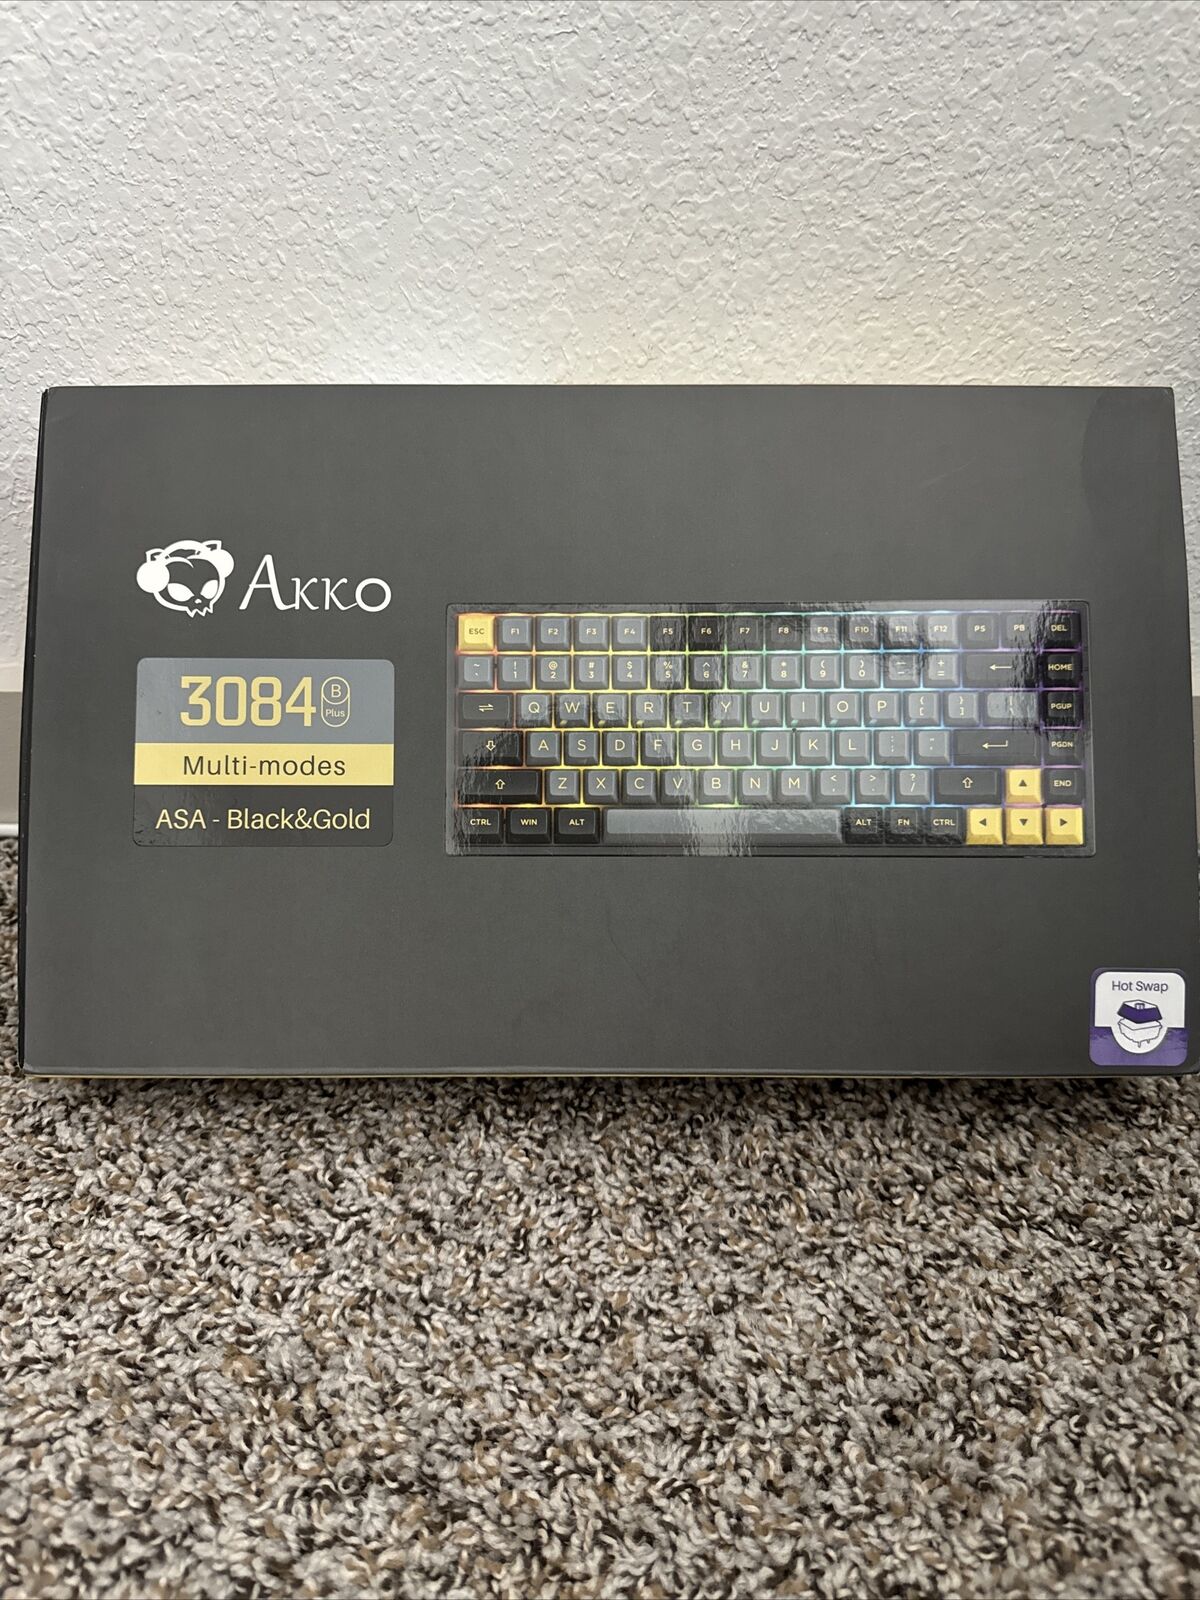 Akko Keyboard 3084 B Plus - Multi-modes